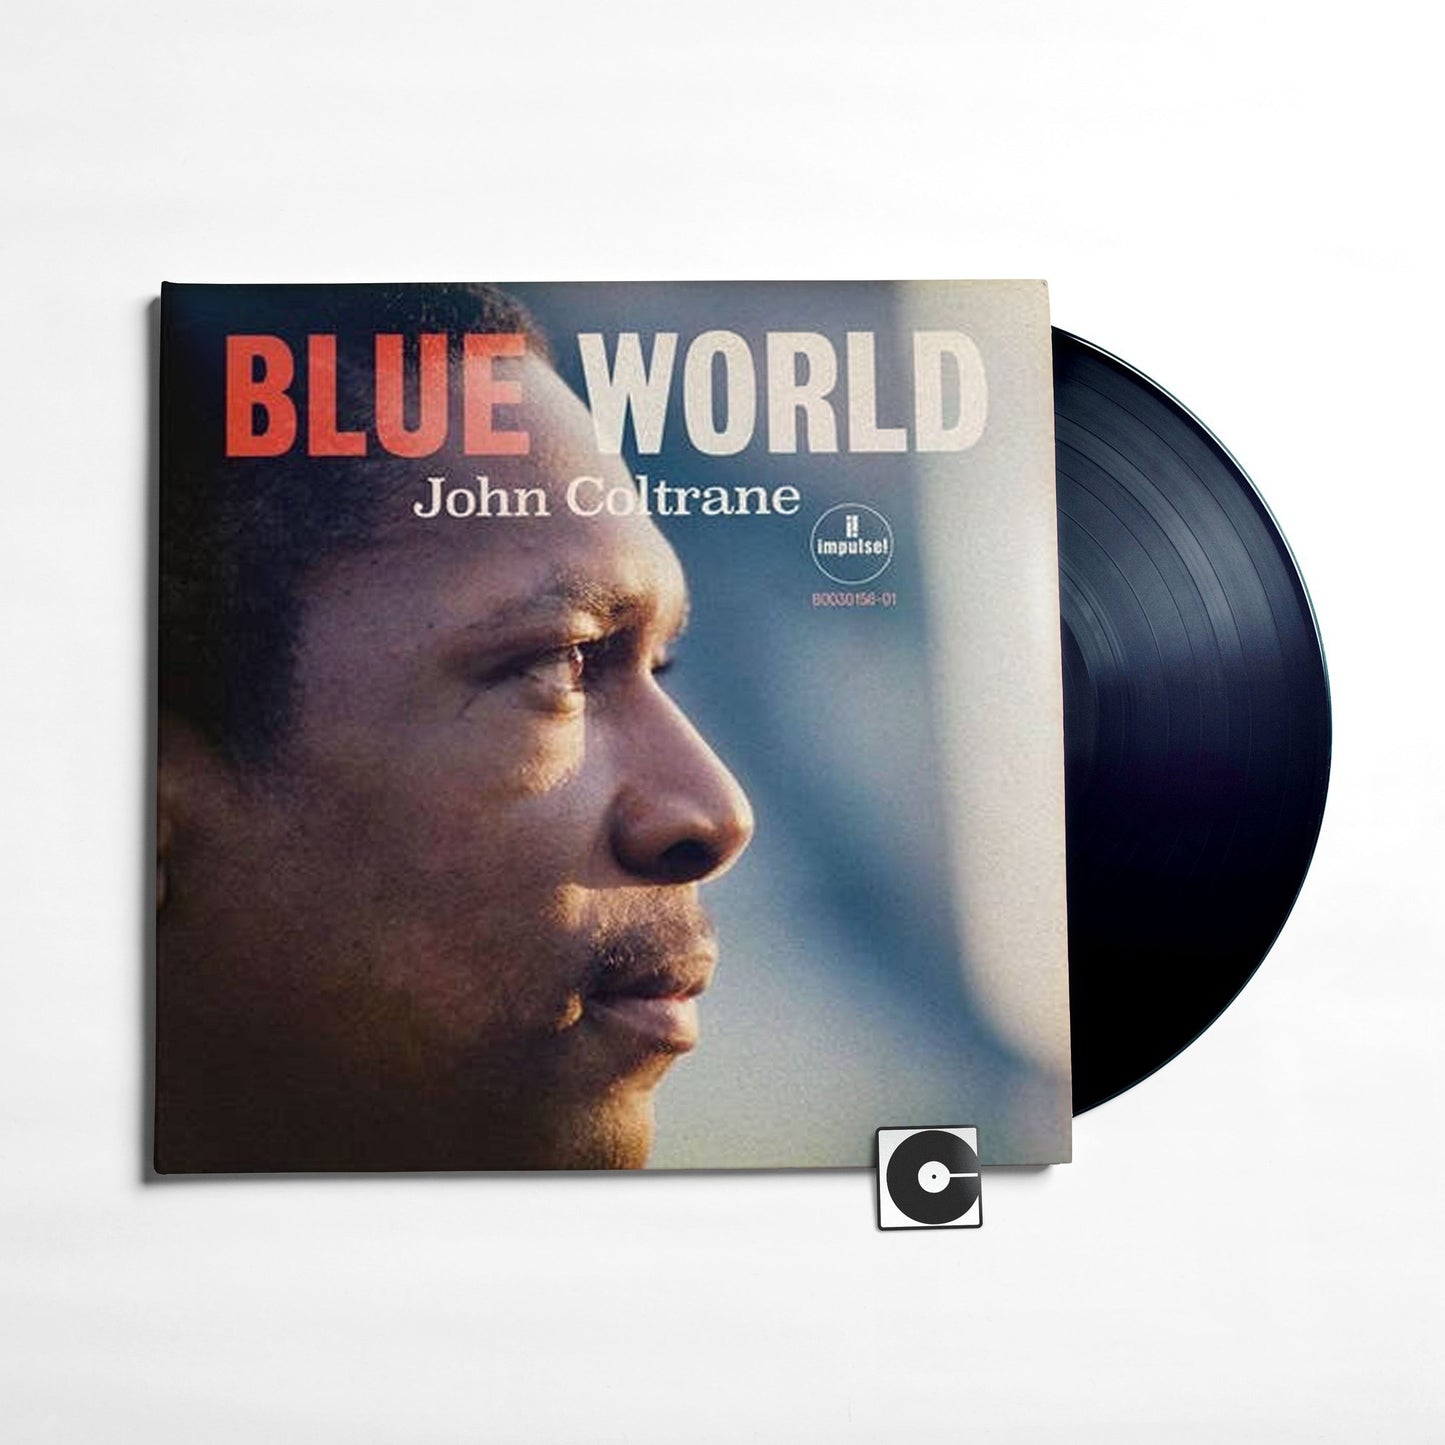 John Coltrane - "Blue World"